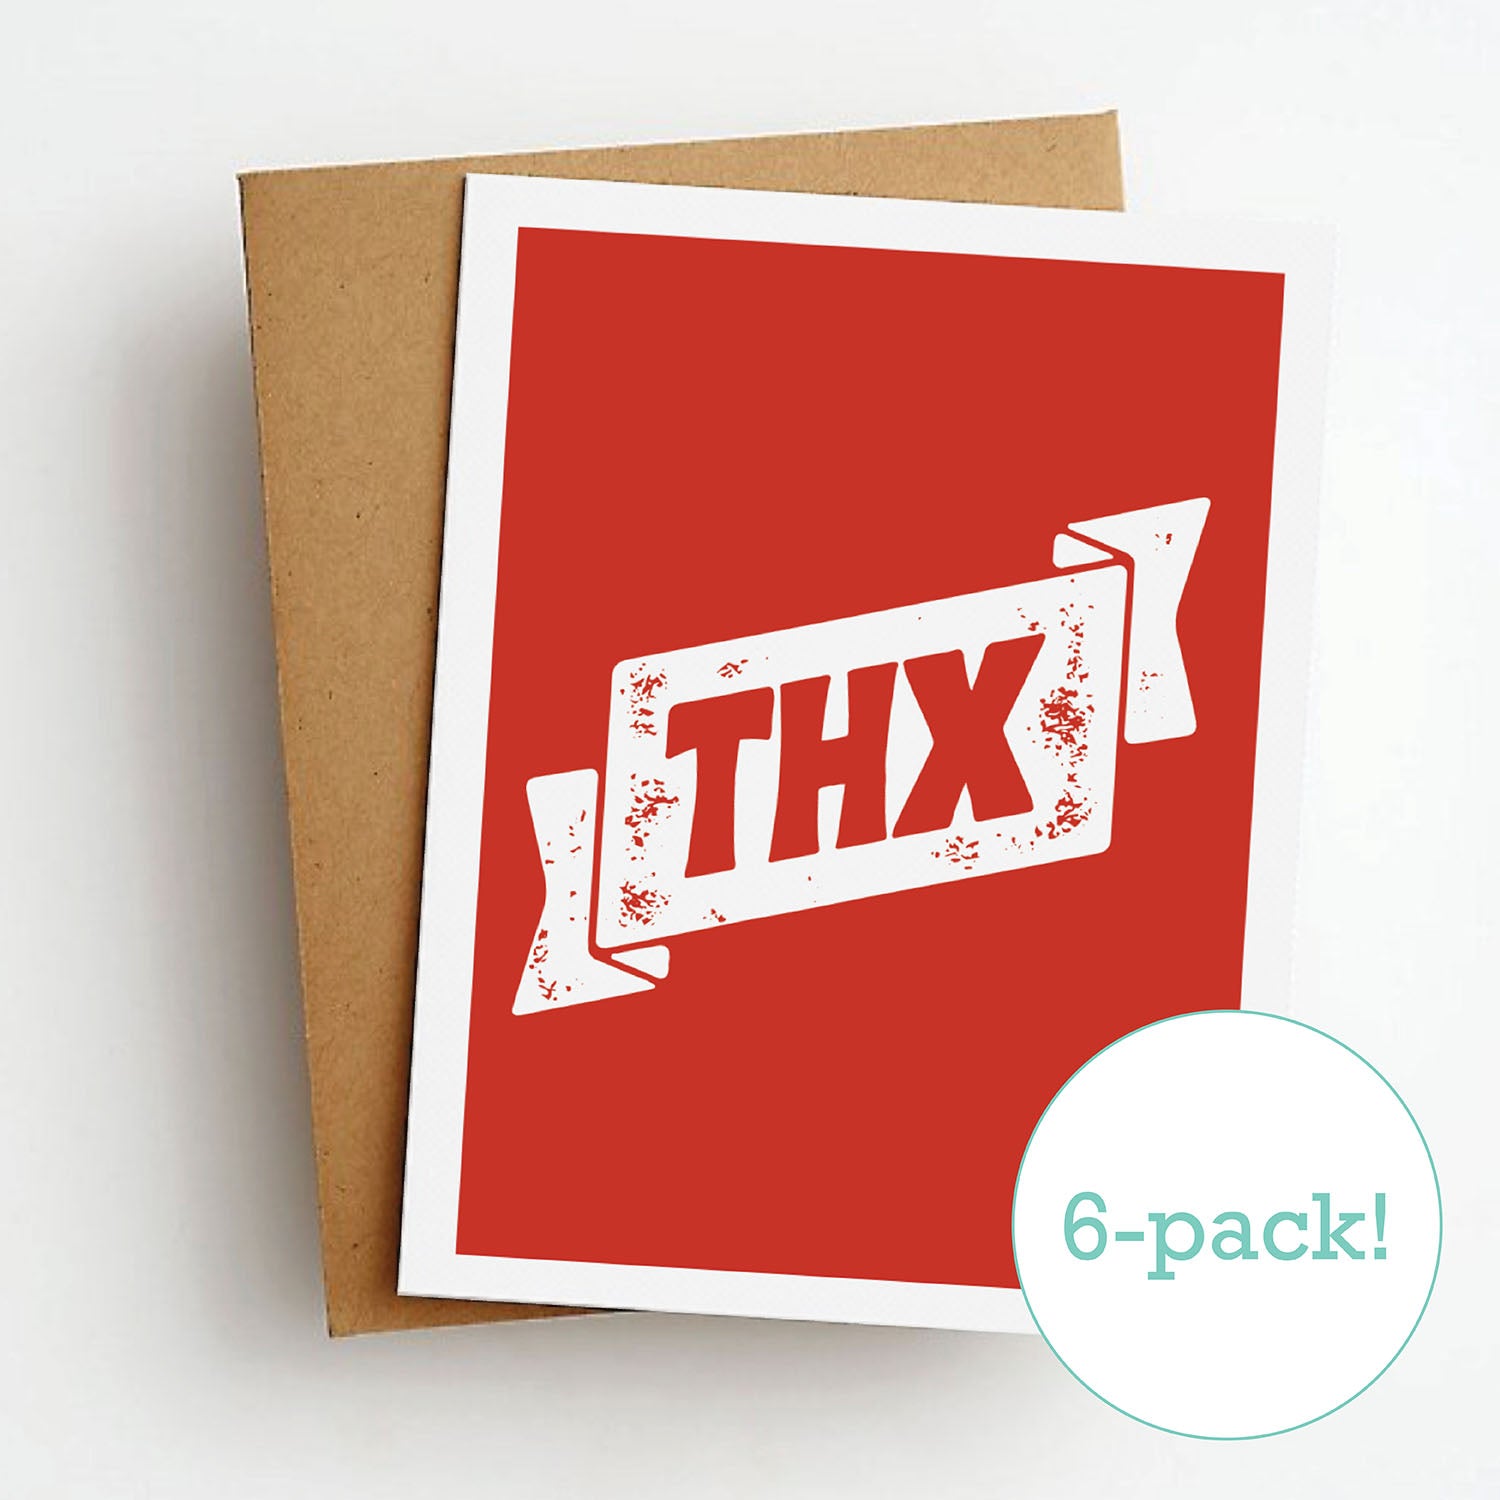 thx cards (6-pack!)